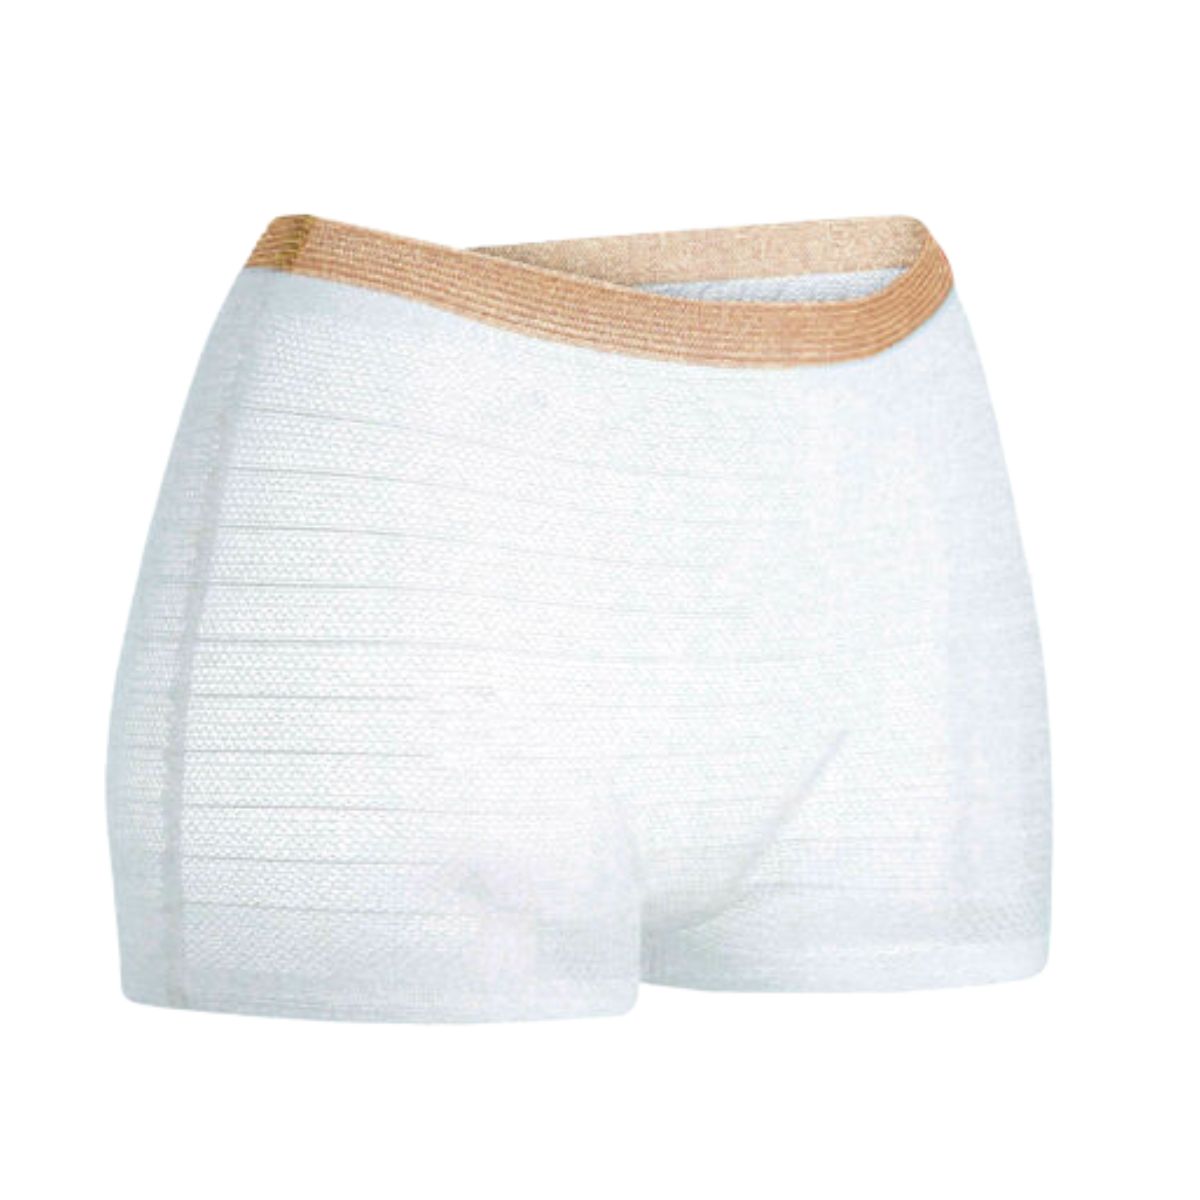 Santex Egosan mesh pants unisex fixation underwear for pads